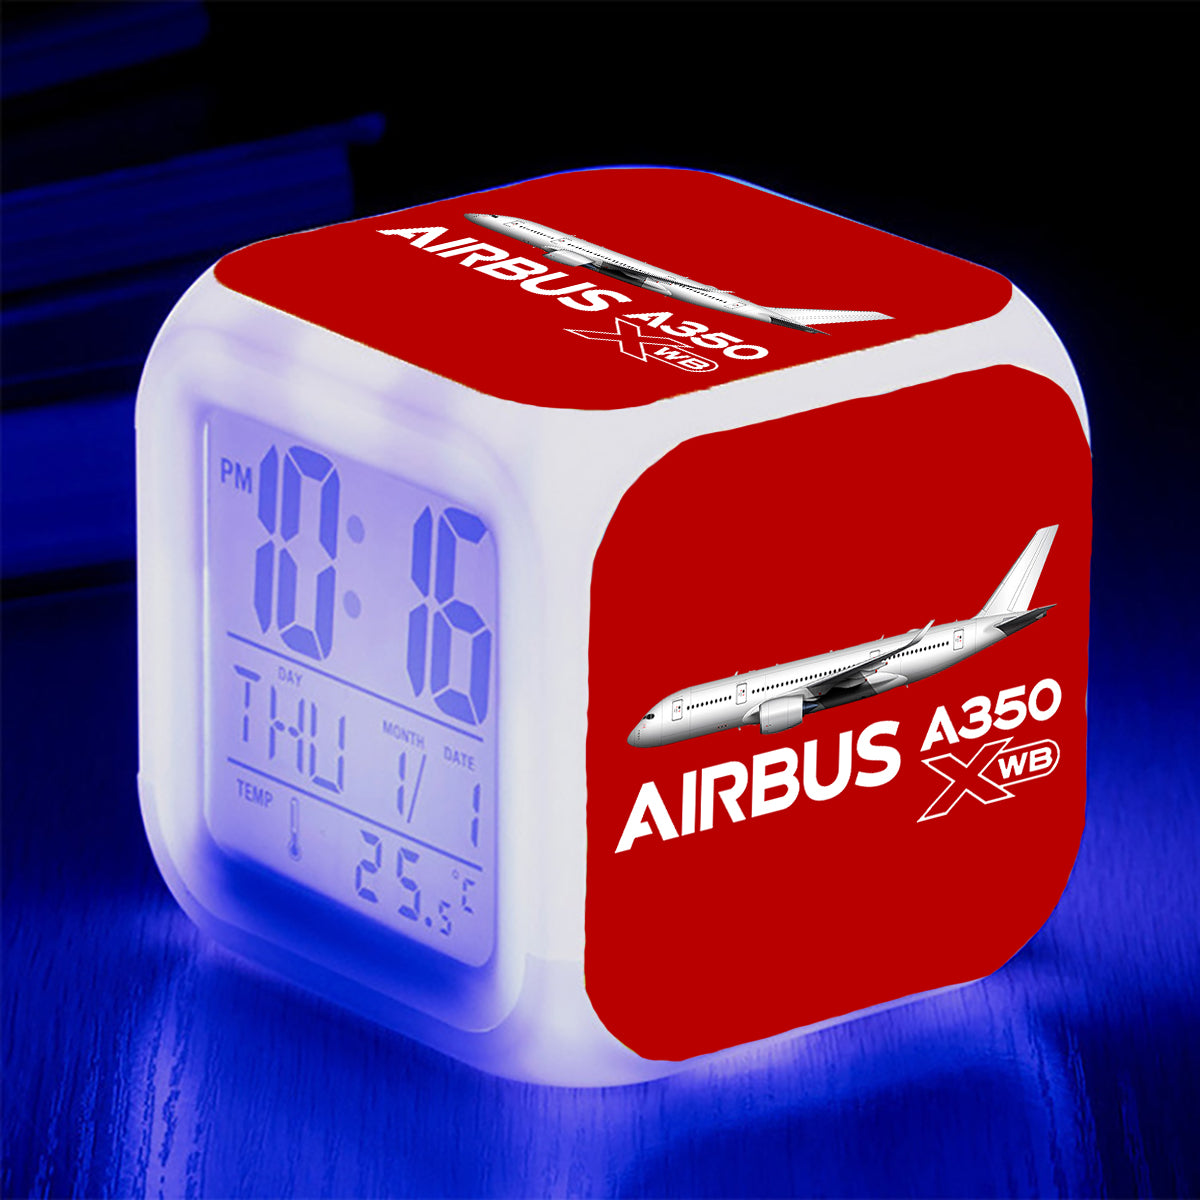 The Airbus A350 WXB Designed "7 Colour" Digital Alarm Clock